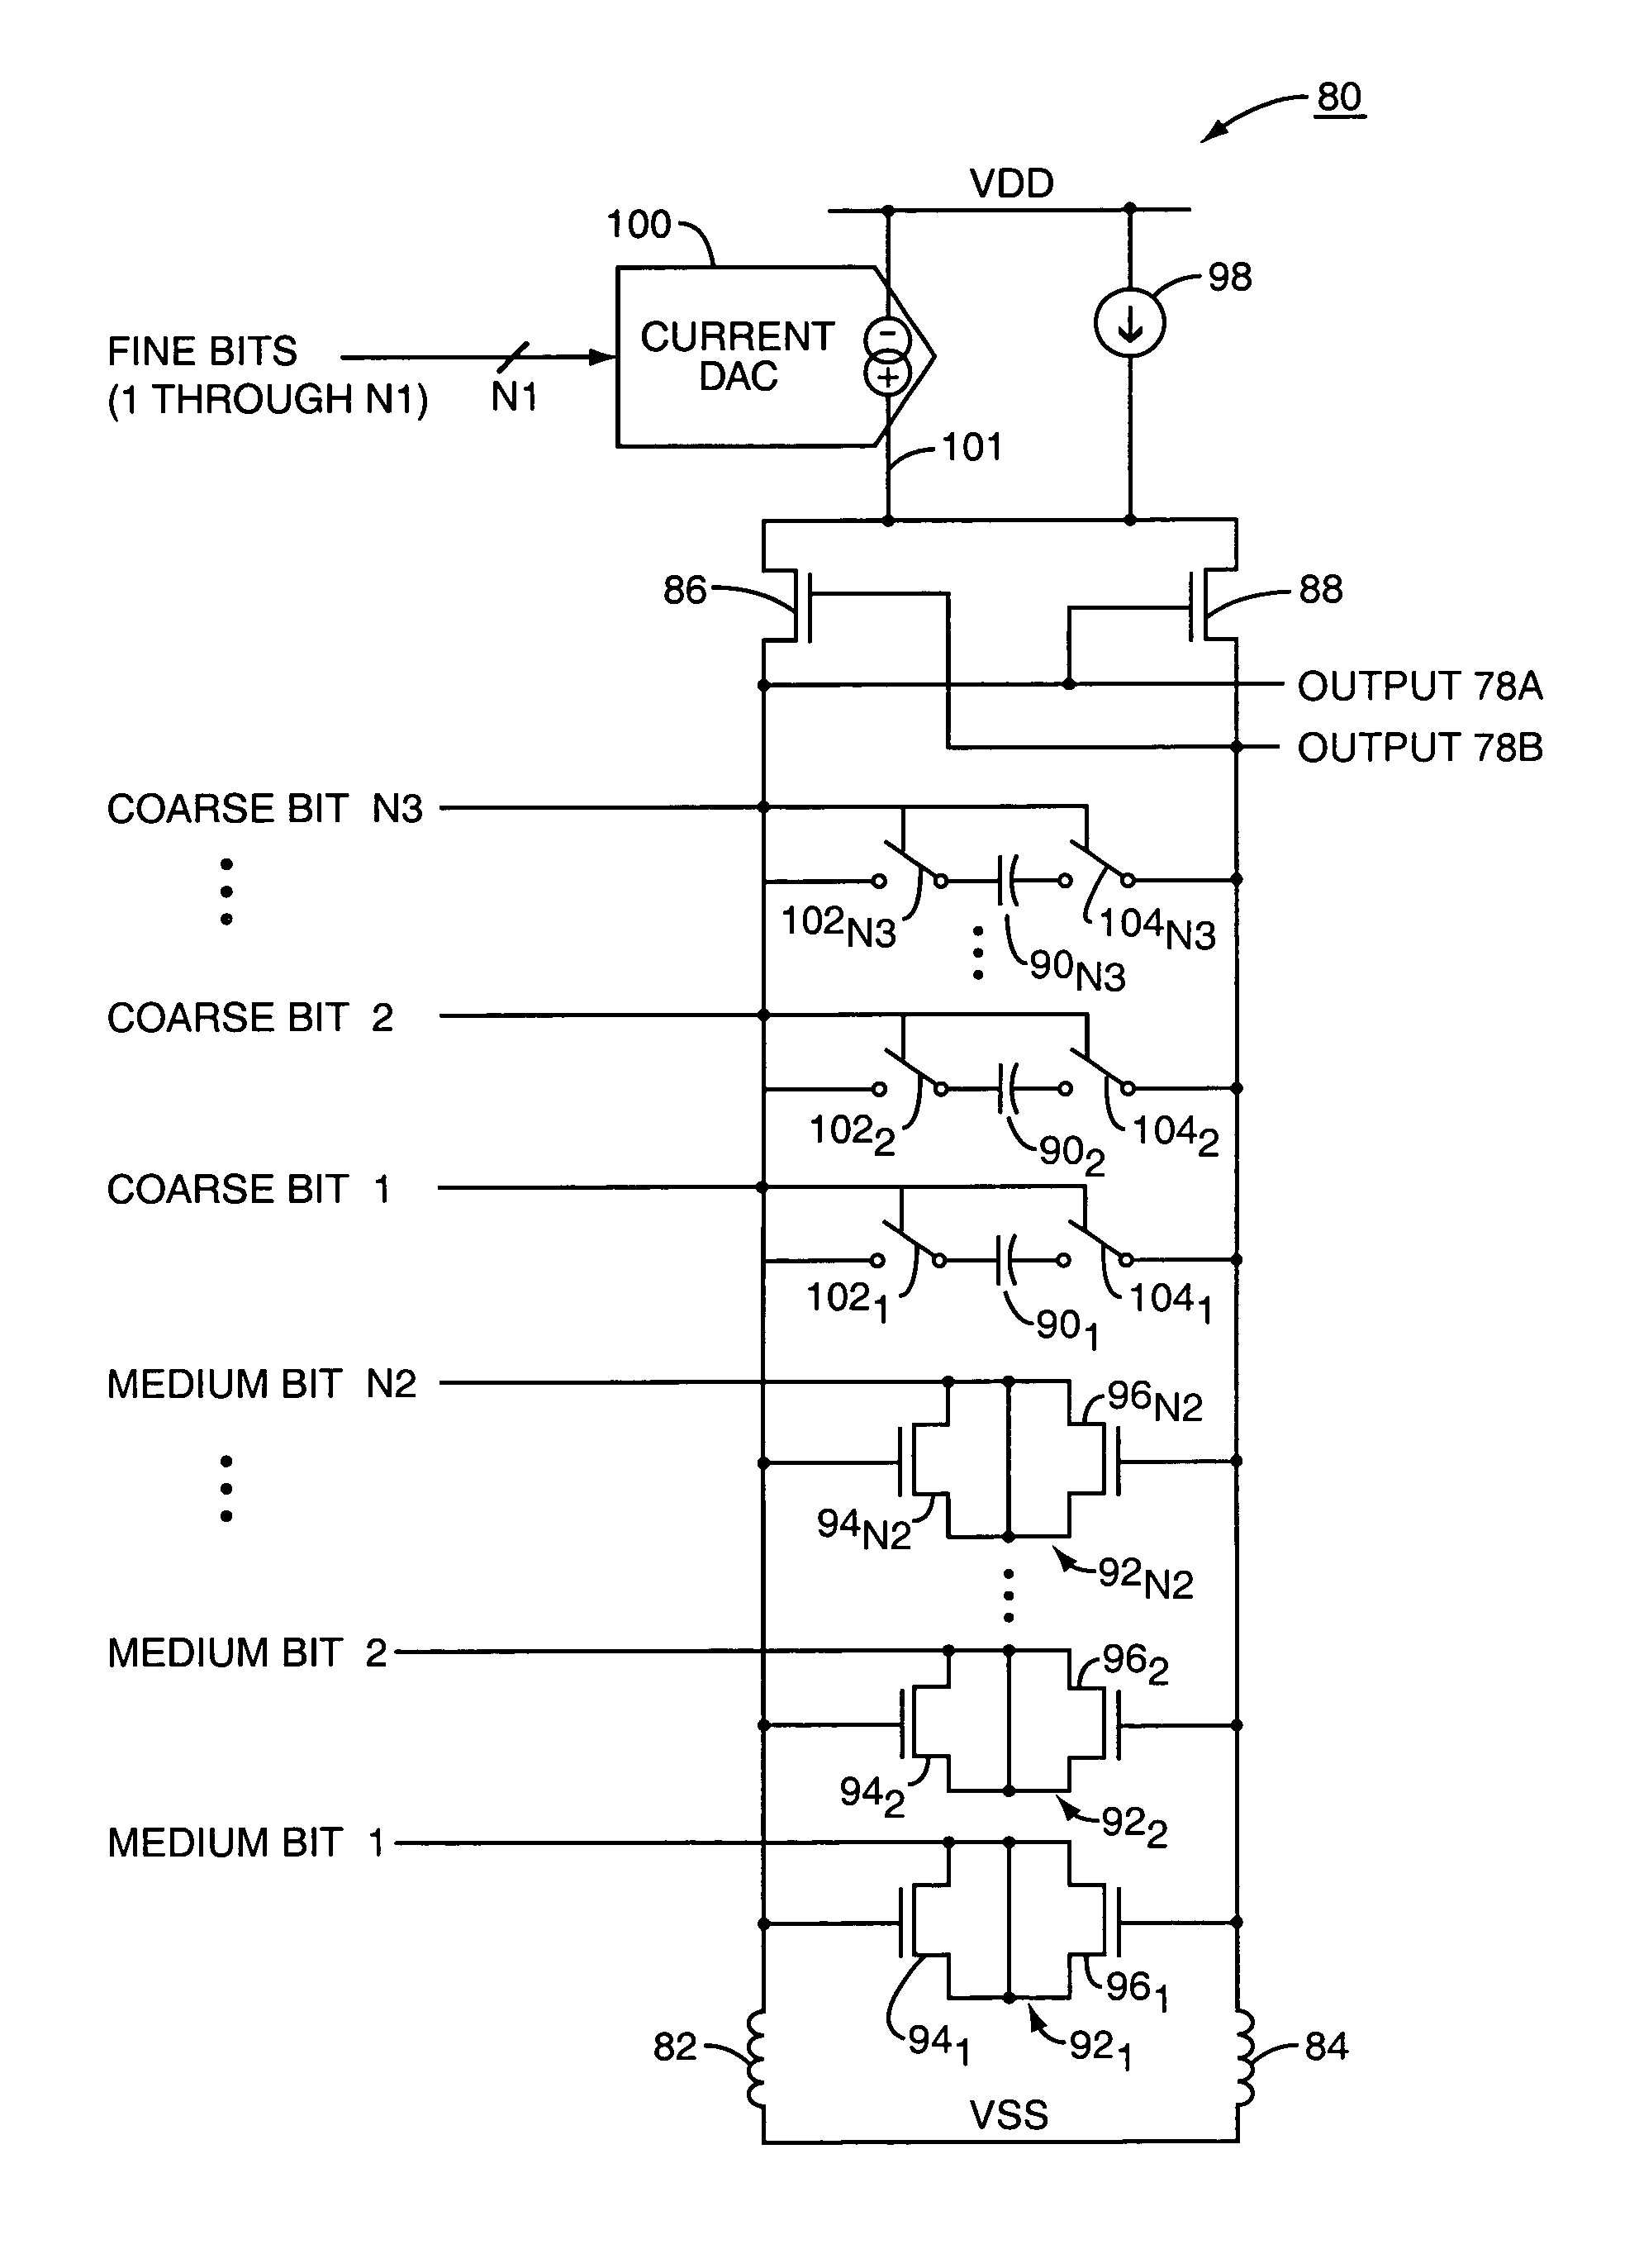 Digitally controlled oscillator